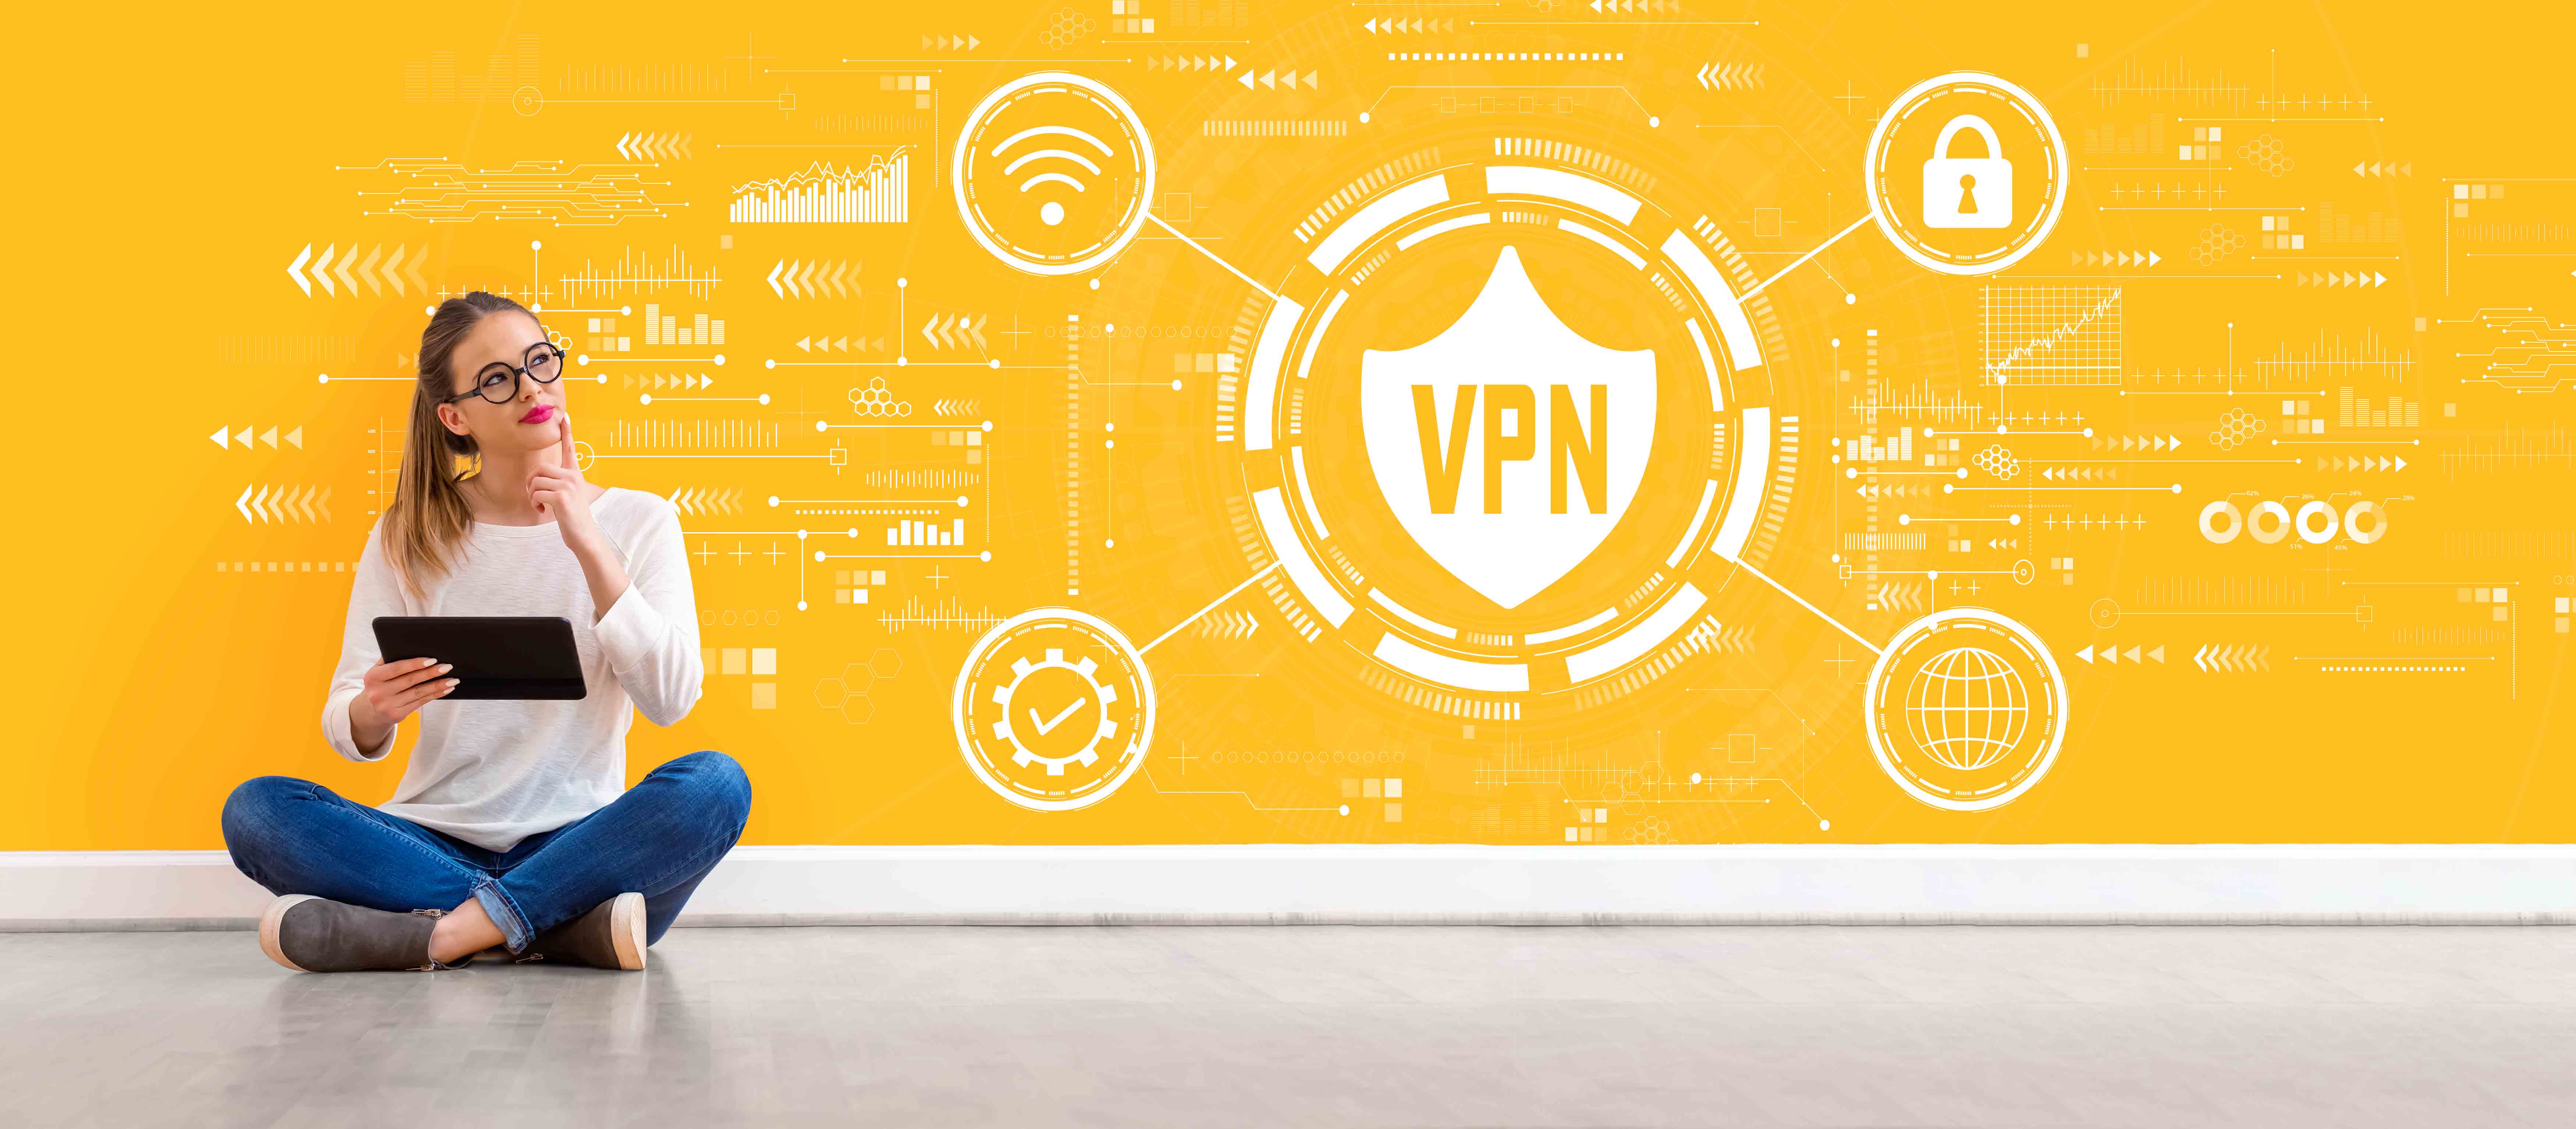 Best Online Banking VPNs 2020